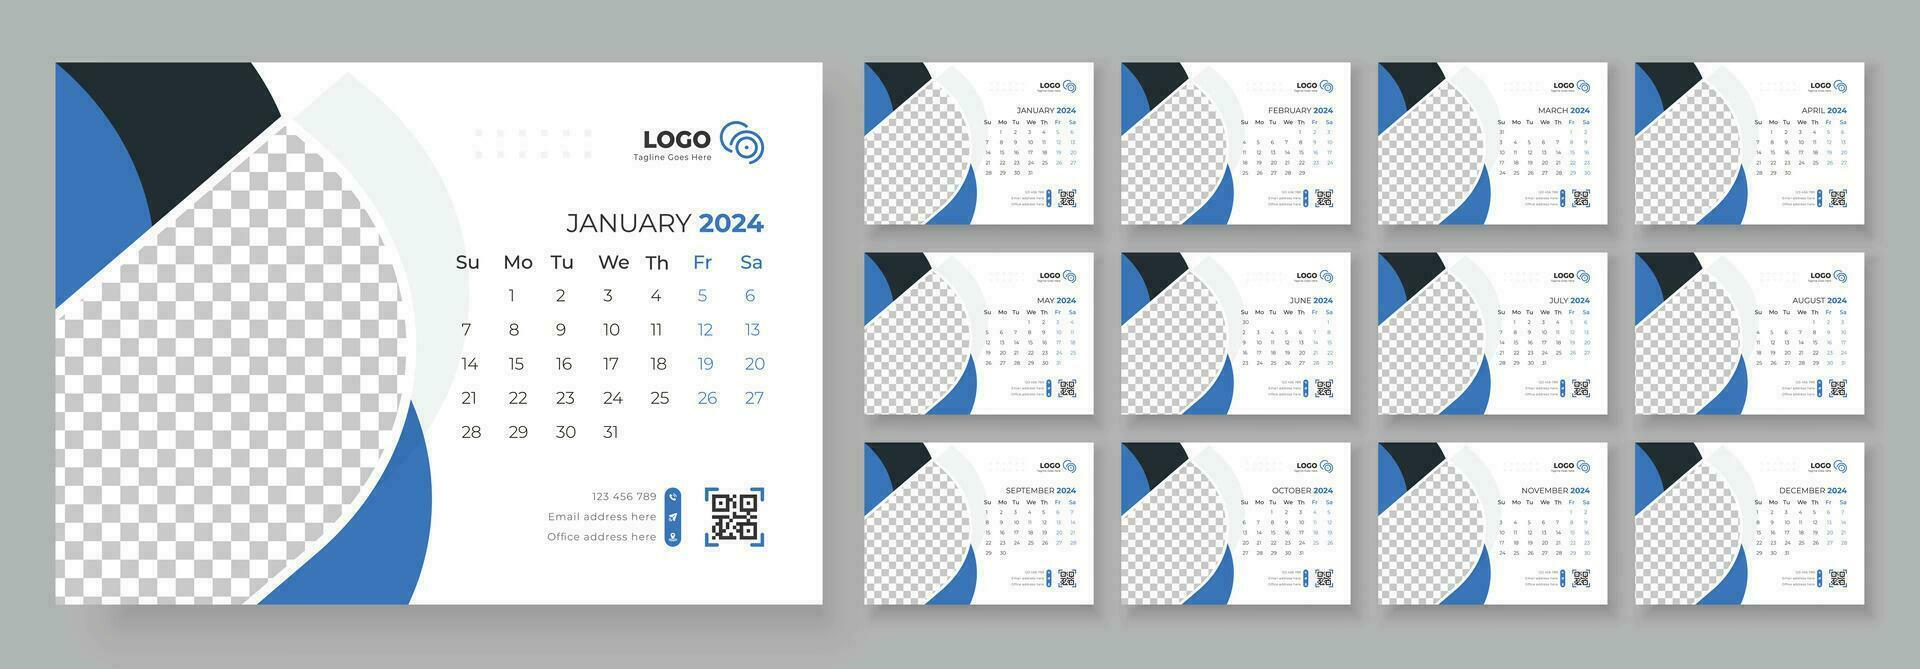 escritorio calendario modelo 2024. escritorio calendario en un minimalista estilo. semana empieza en domingo. calendario 2024 planificador corporativo modelo diseño. vector